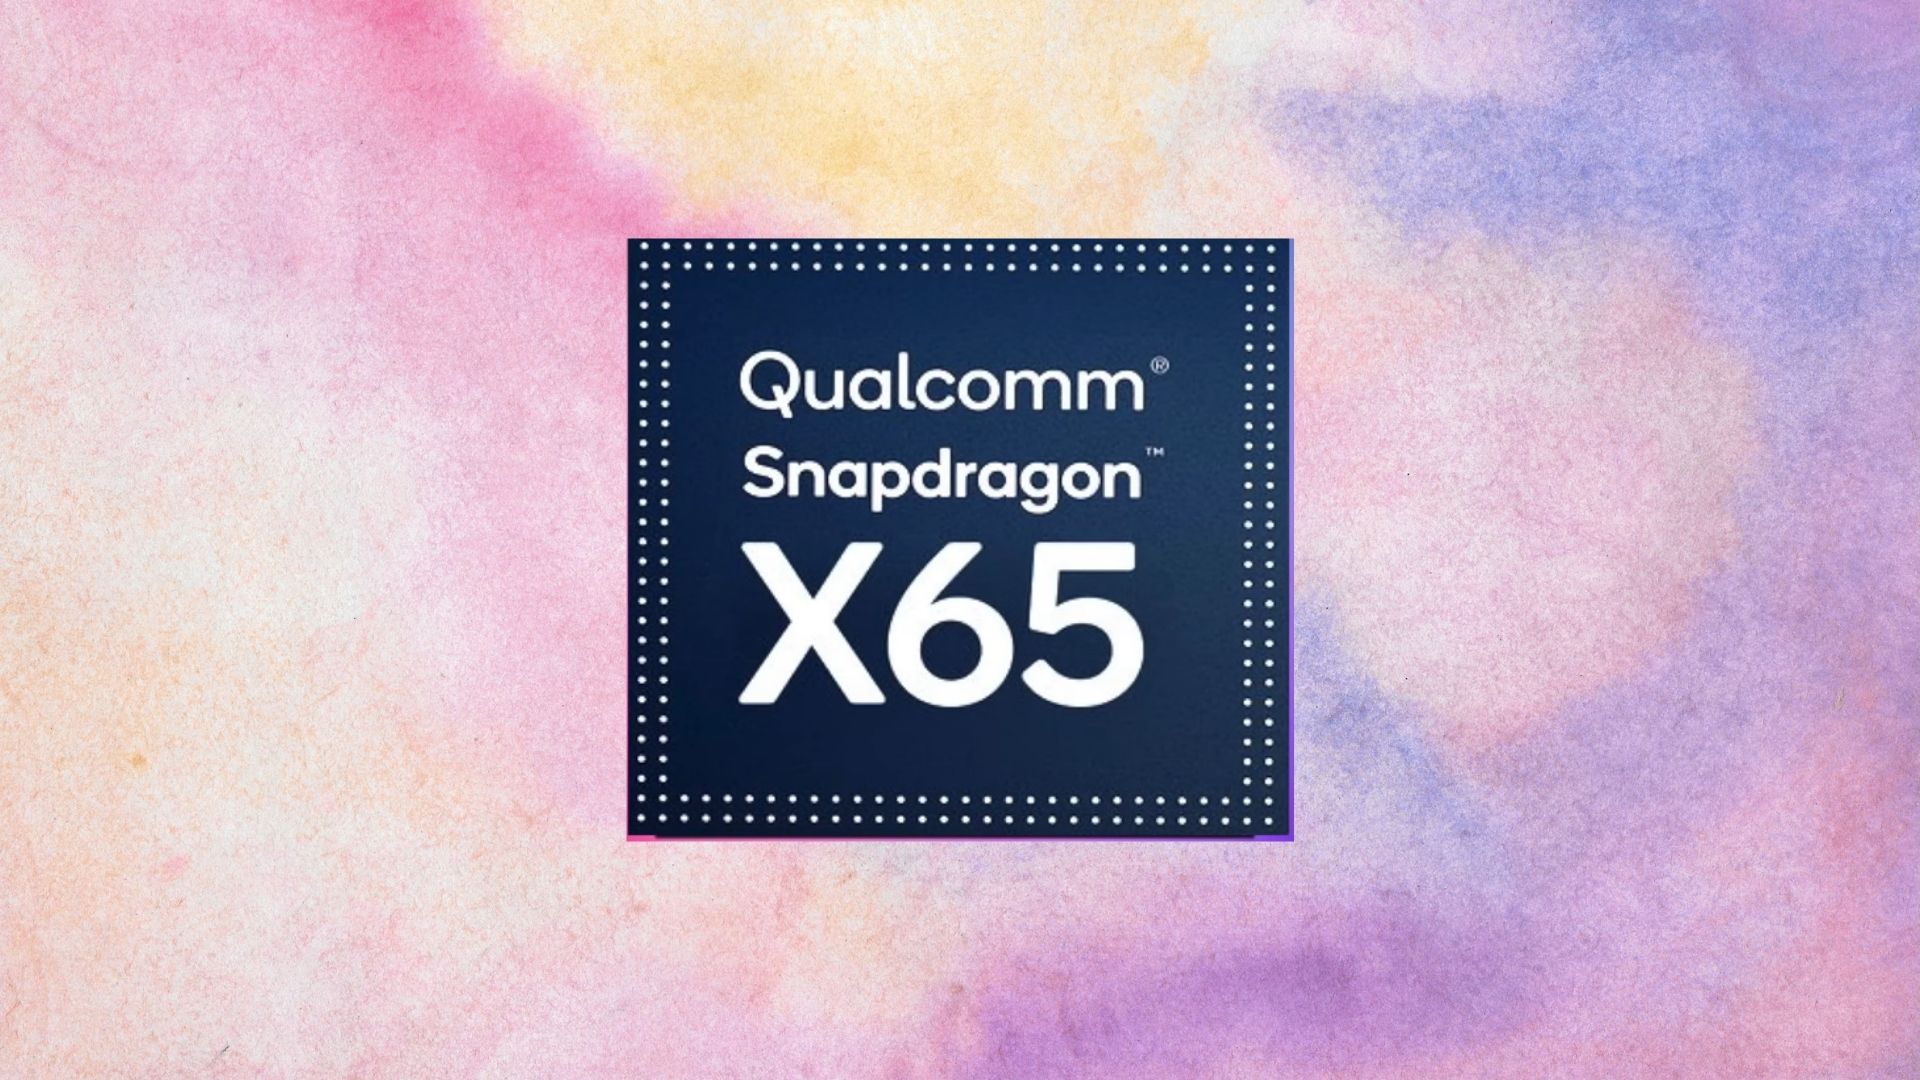 Qualcomm's Snapdragon X65 modem